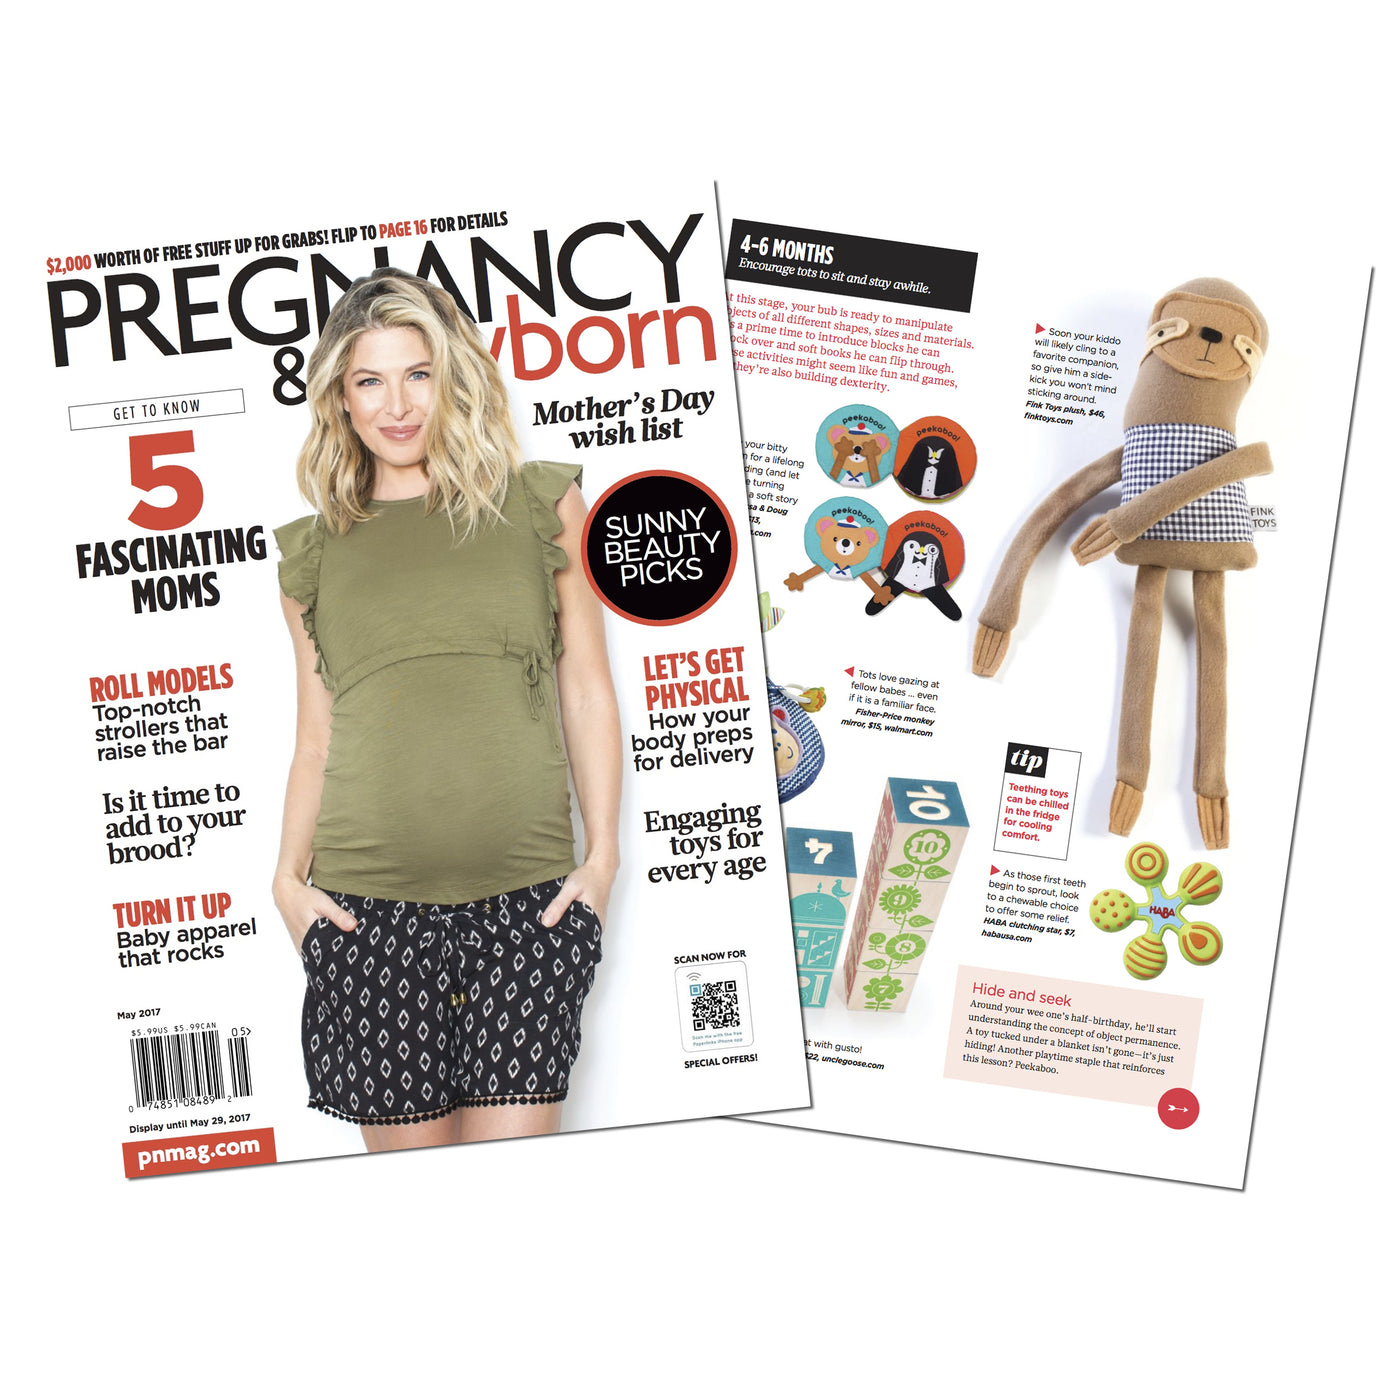 HABA Silicone Star Teether Featured in Pregnancy & Newborn Magazine